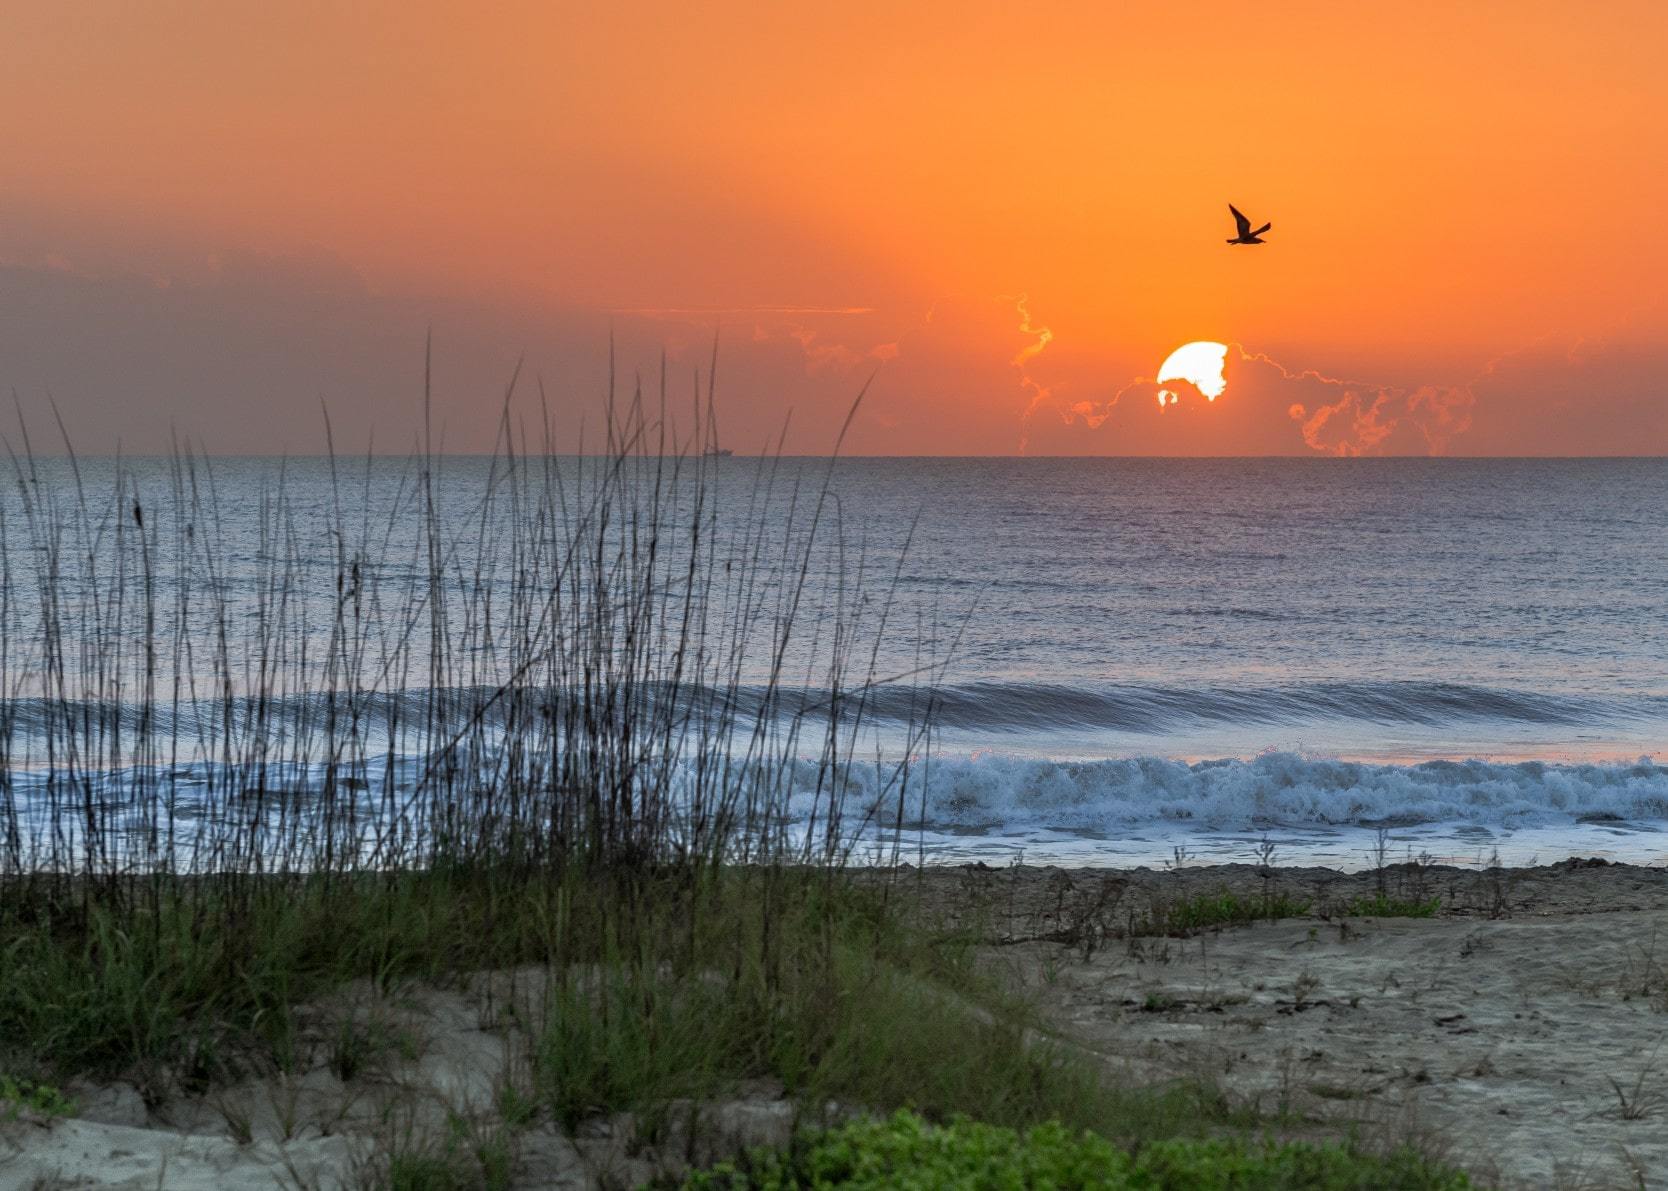 Sunset over the Atlantic Ocean at Cocoa Beach, Florida